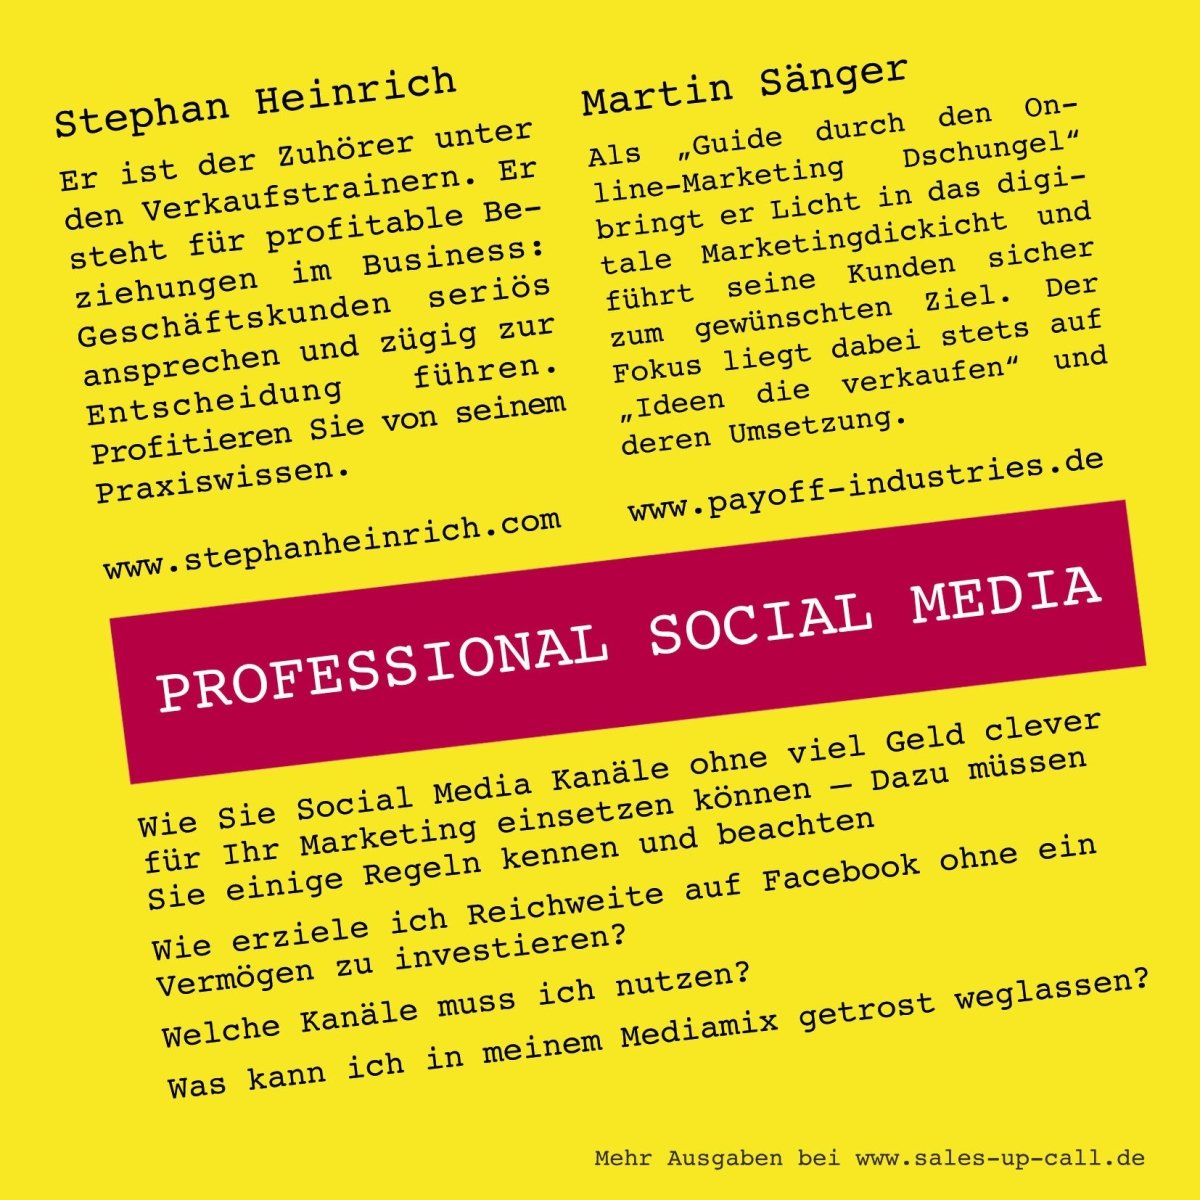 Professional Social Media - Sales-up-Call - Stephan Heinrich